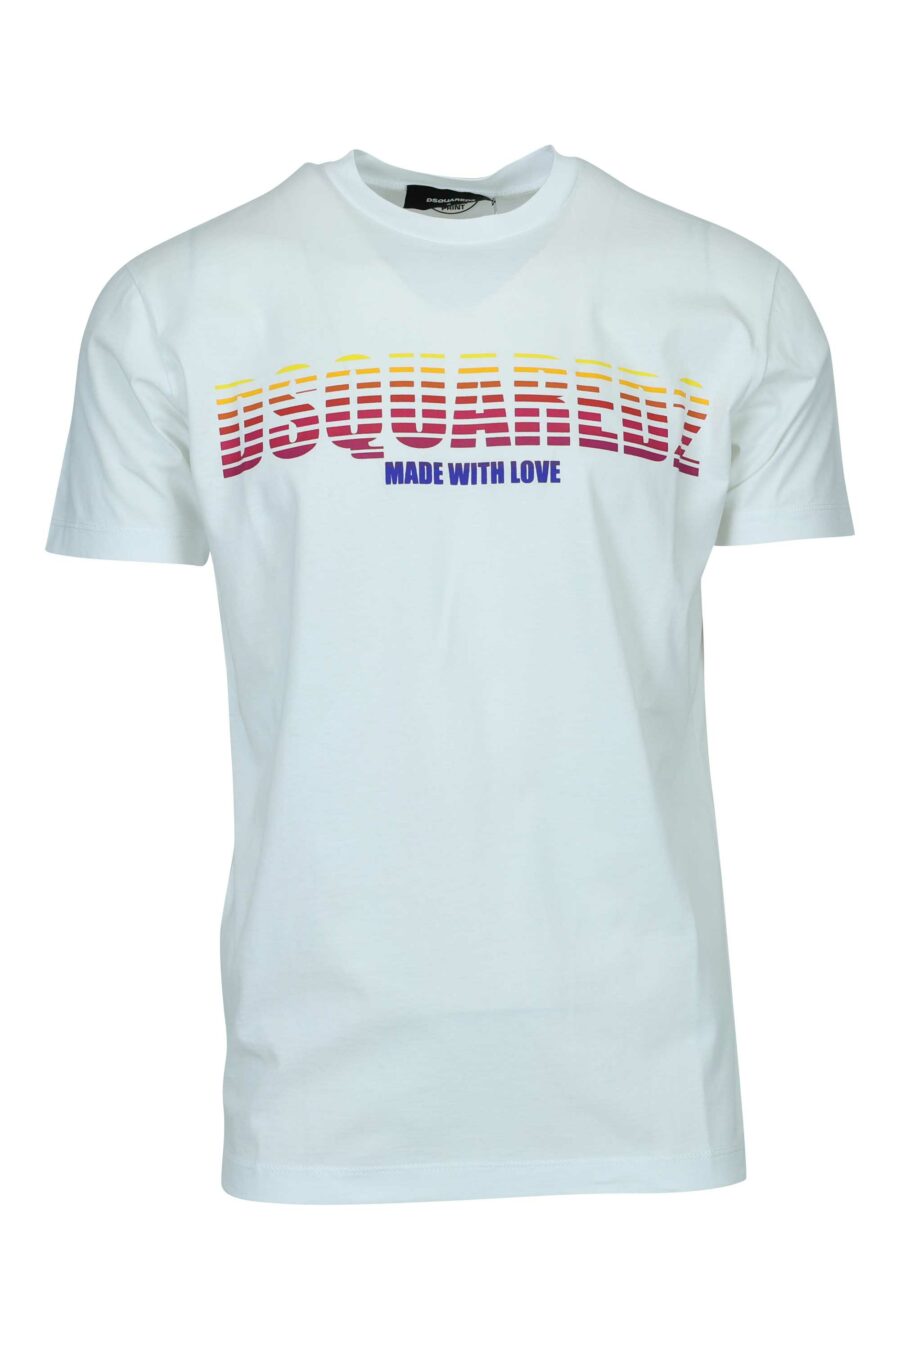 Camiseta blanca con maxilogo multicolor retro - 8054148447434 2